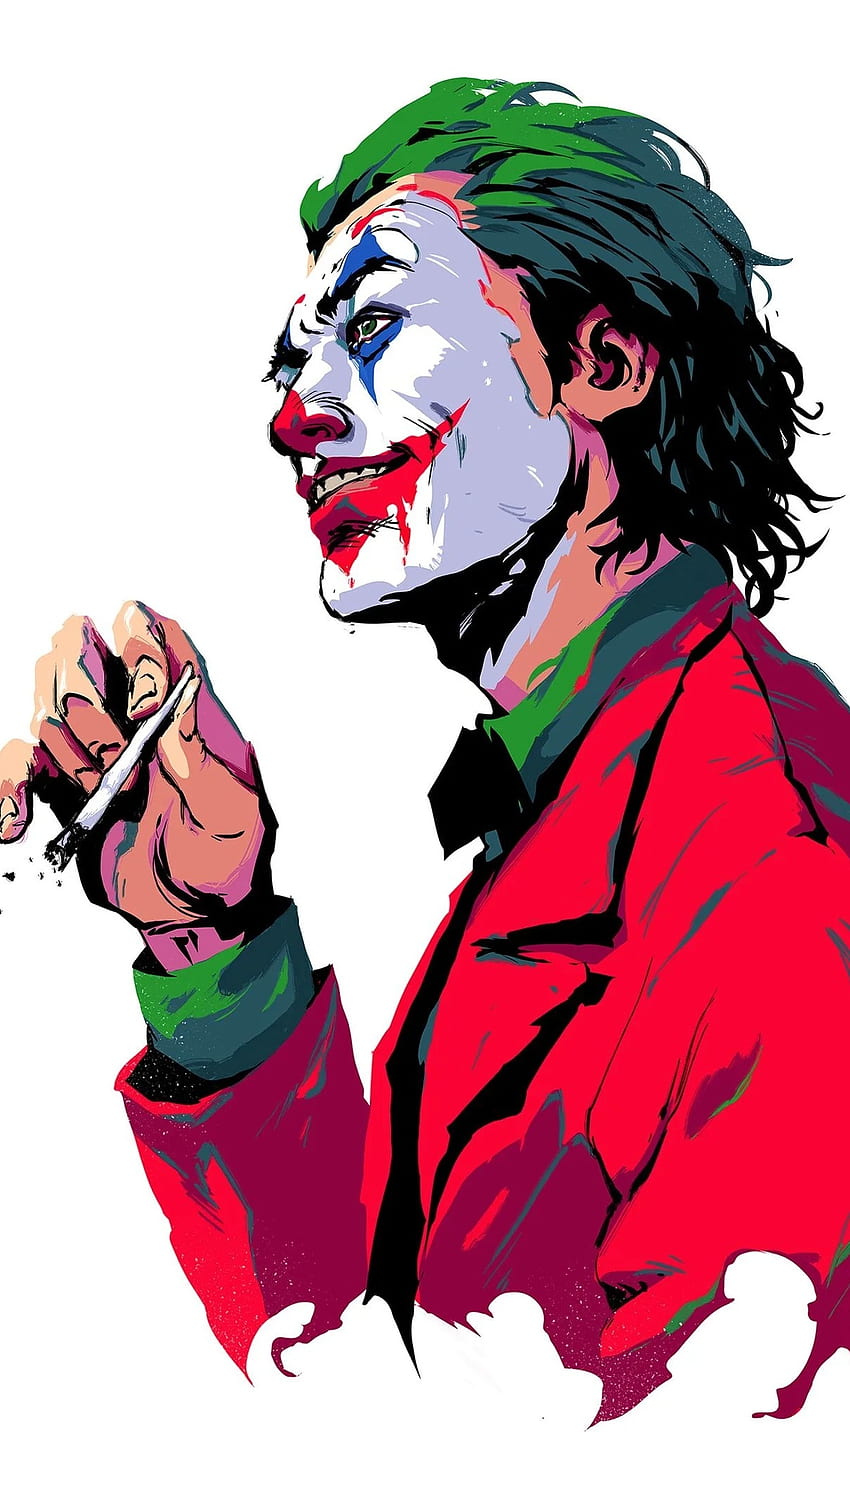 Pencil sketch of Joker | Pencil art | Pinterest | Jokers, Heath ... |  Desenhos do coringa, Retrato, Desenho de retrato